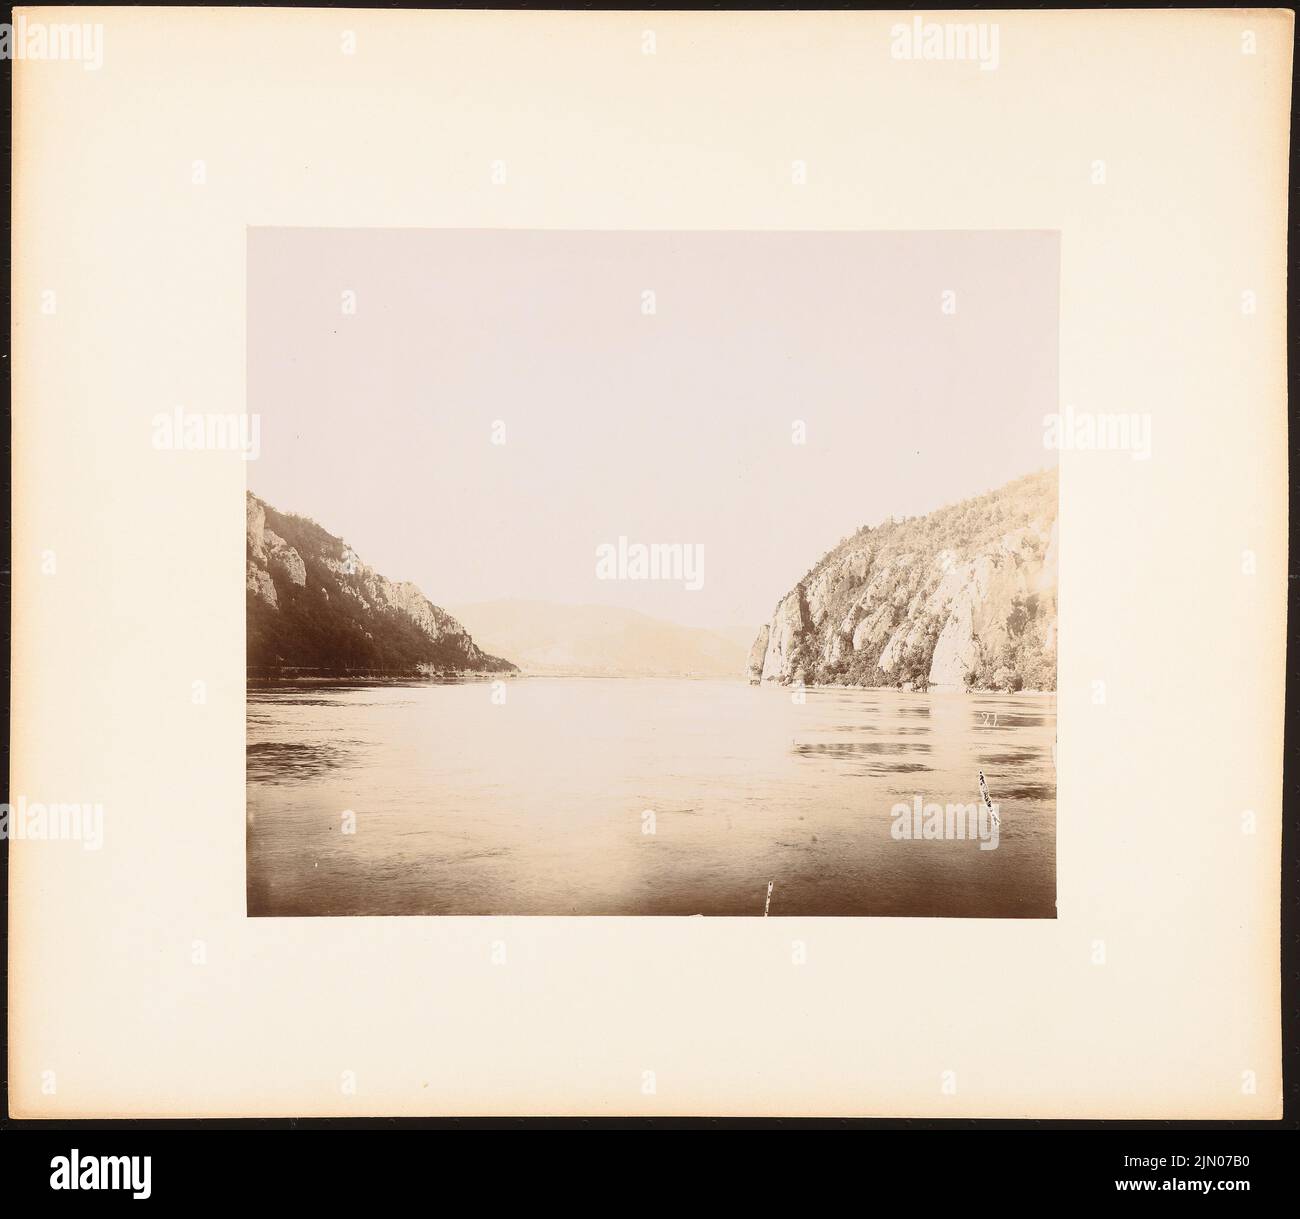 Hutterer Za, Kazan uscita (senza data): Paesaggio fluviale. Foto su cartone, 42,2 x 48,6 cm (compresi i bordi di scansione) Hutterer Geza (1864-1917): Kasan-Ausgang Foto Stock